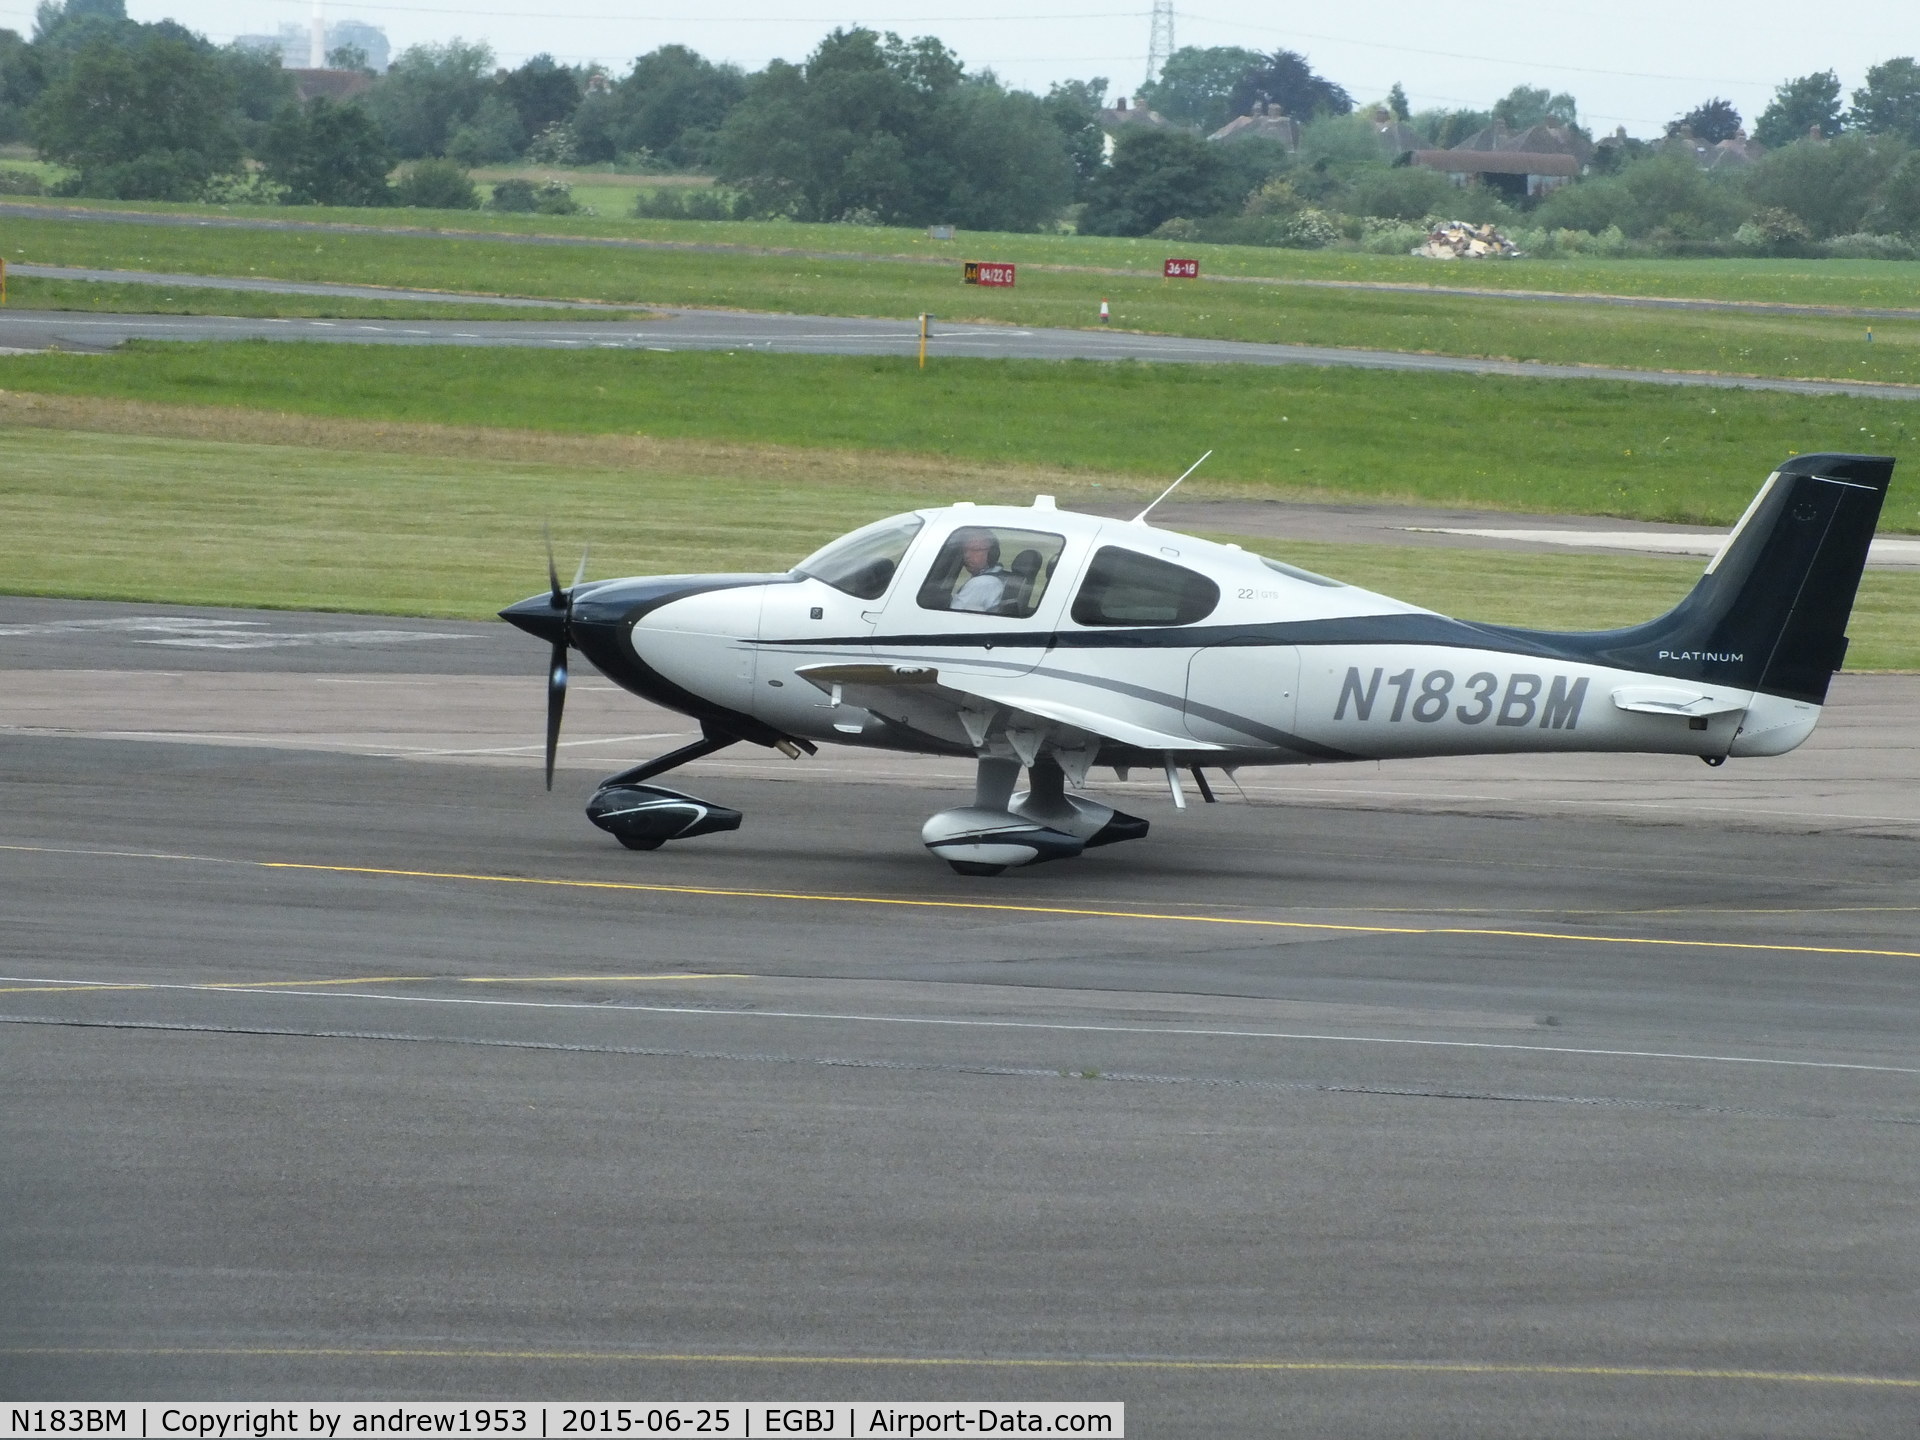 N183BM, 2014 Cirrus SR22 C/N 4080, N183BM at Gloucestershire Airport.